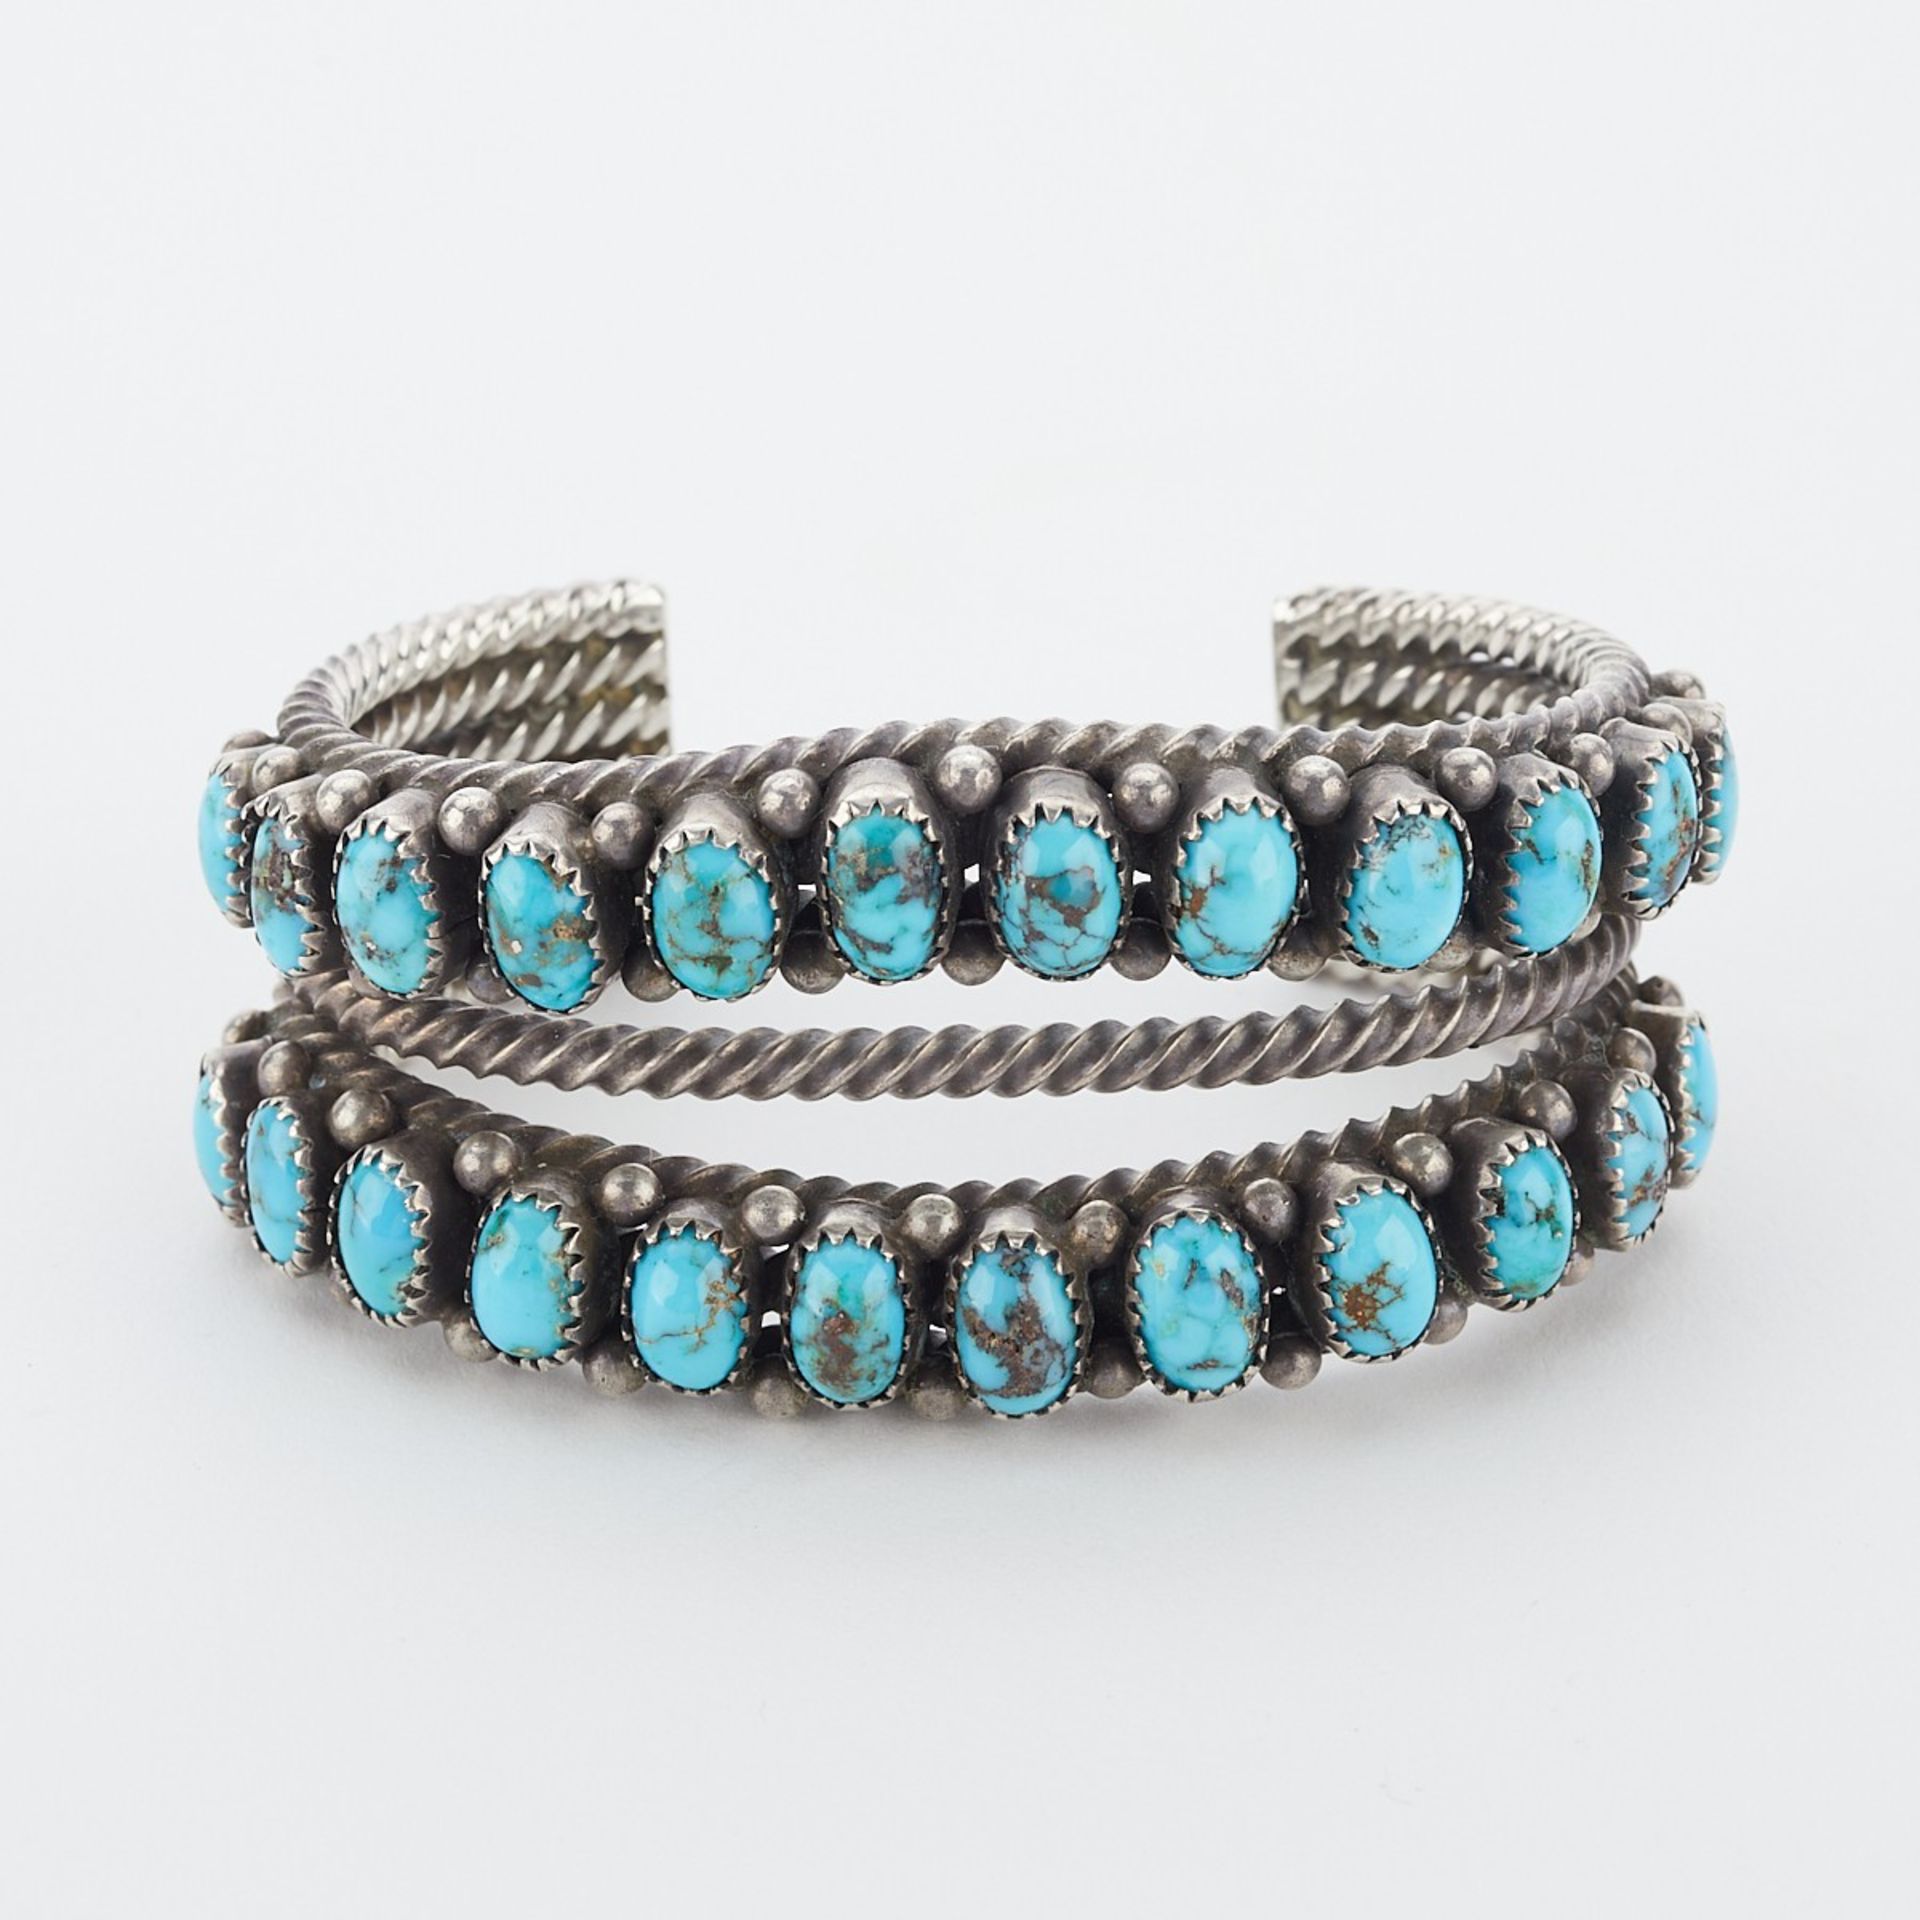 Group of 5 Southwest Turquoise Bracelet Cuffs - Image 8 of 10